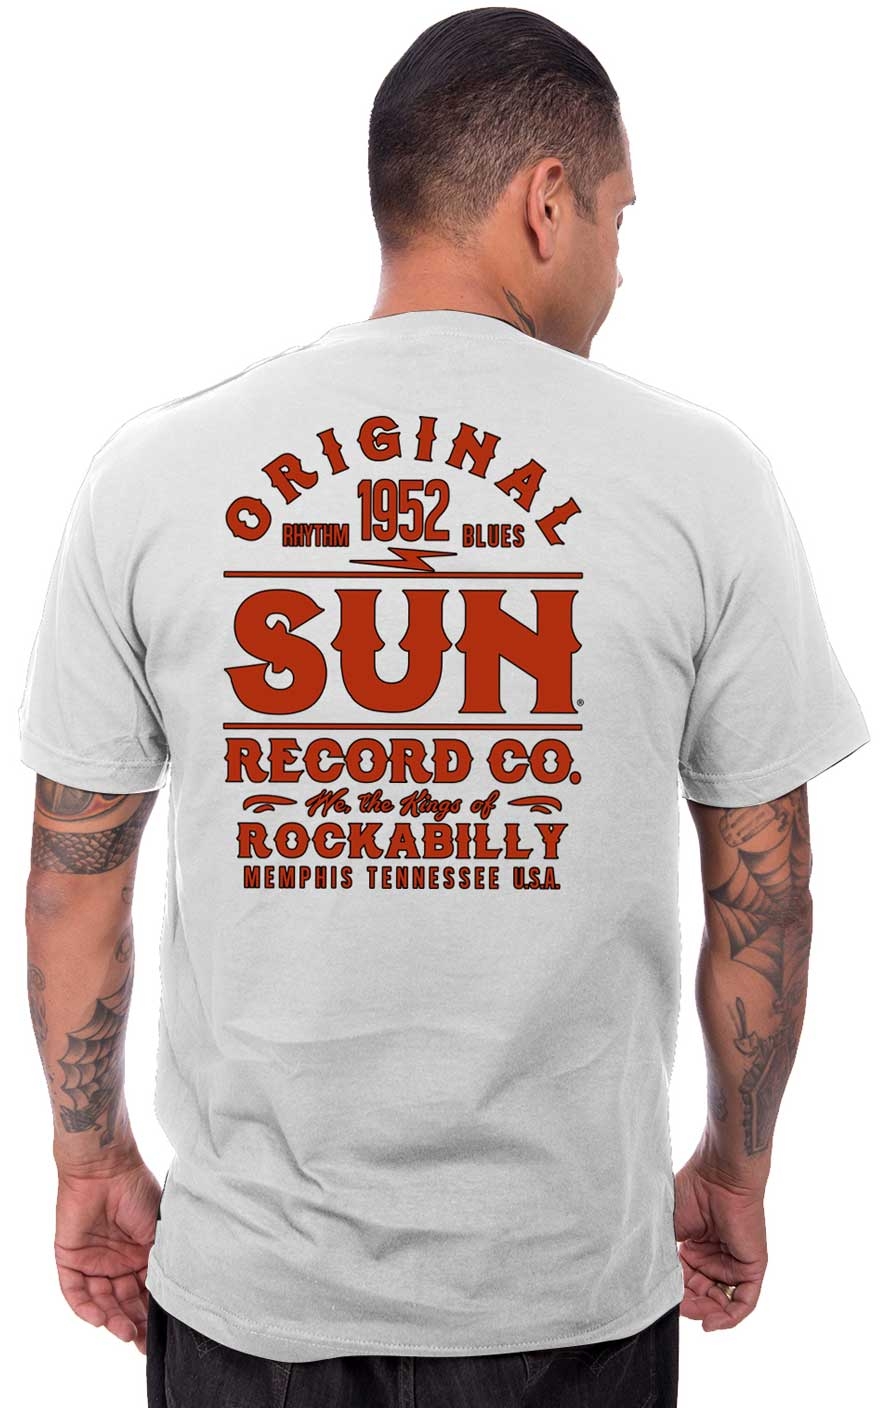 ROCKABILLY RULES OK? Essential T-Shirt for Sale by shockin